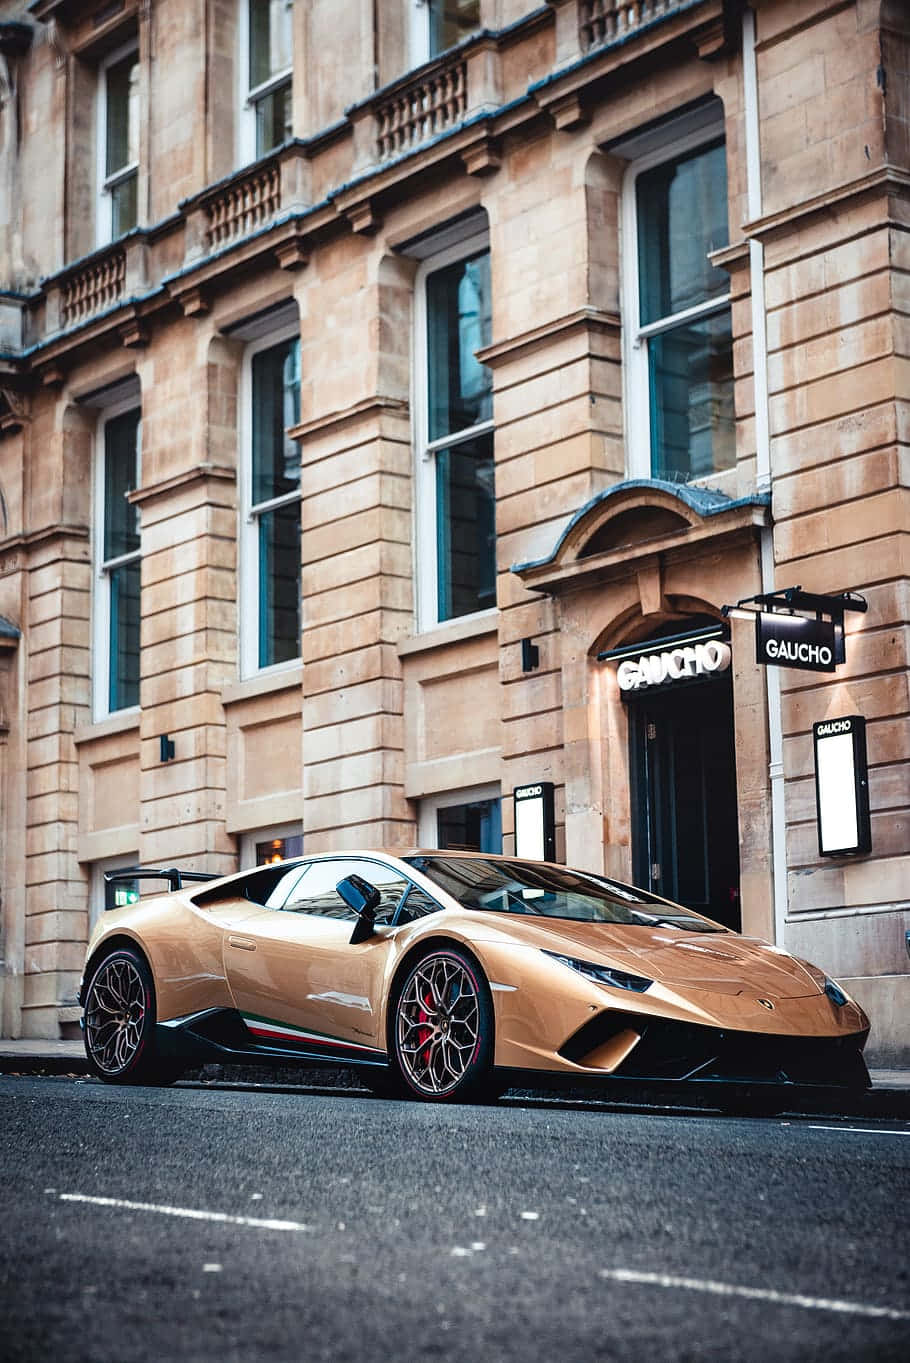 Gold Cars Lamborghini In City